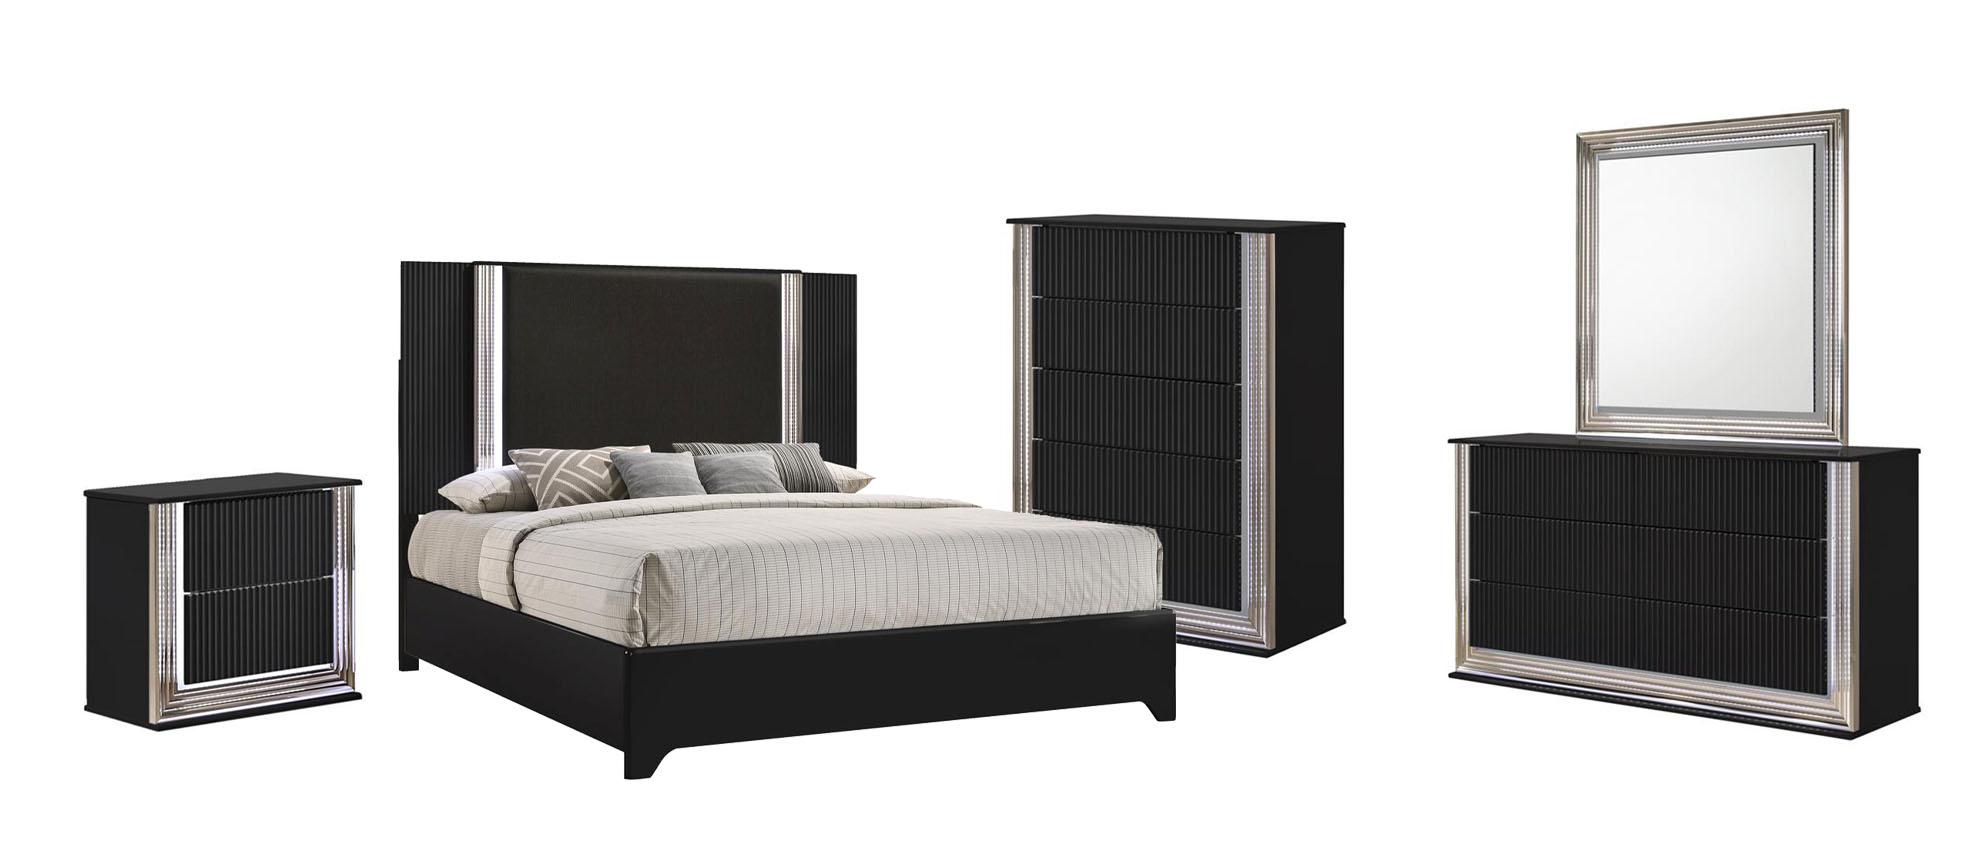 Modern Platform Bedroom Set ASPEN ASPEN-BLACK-QB-Set-5 in Black Faux Leather